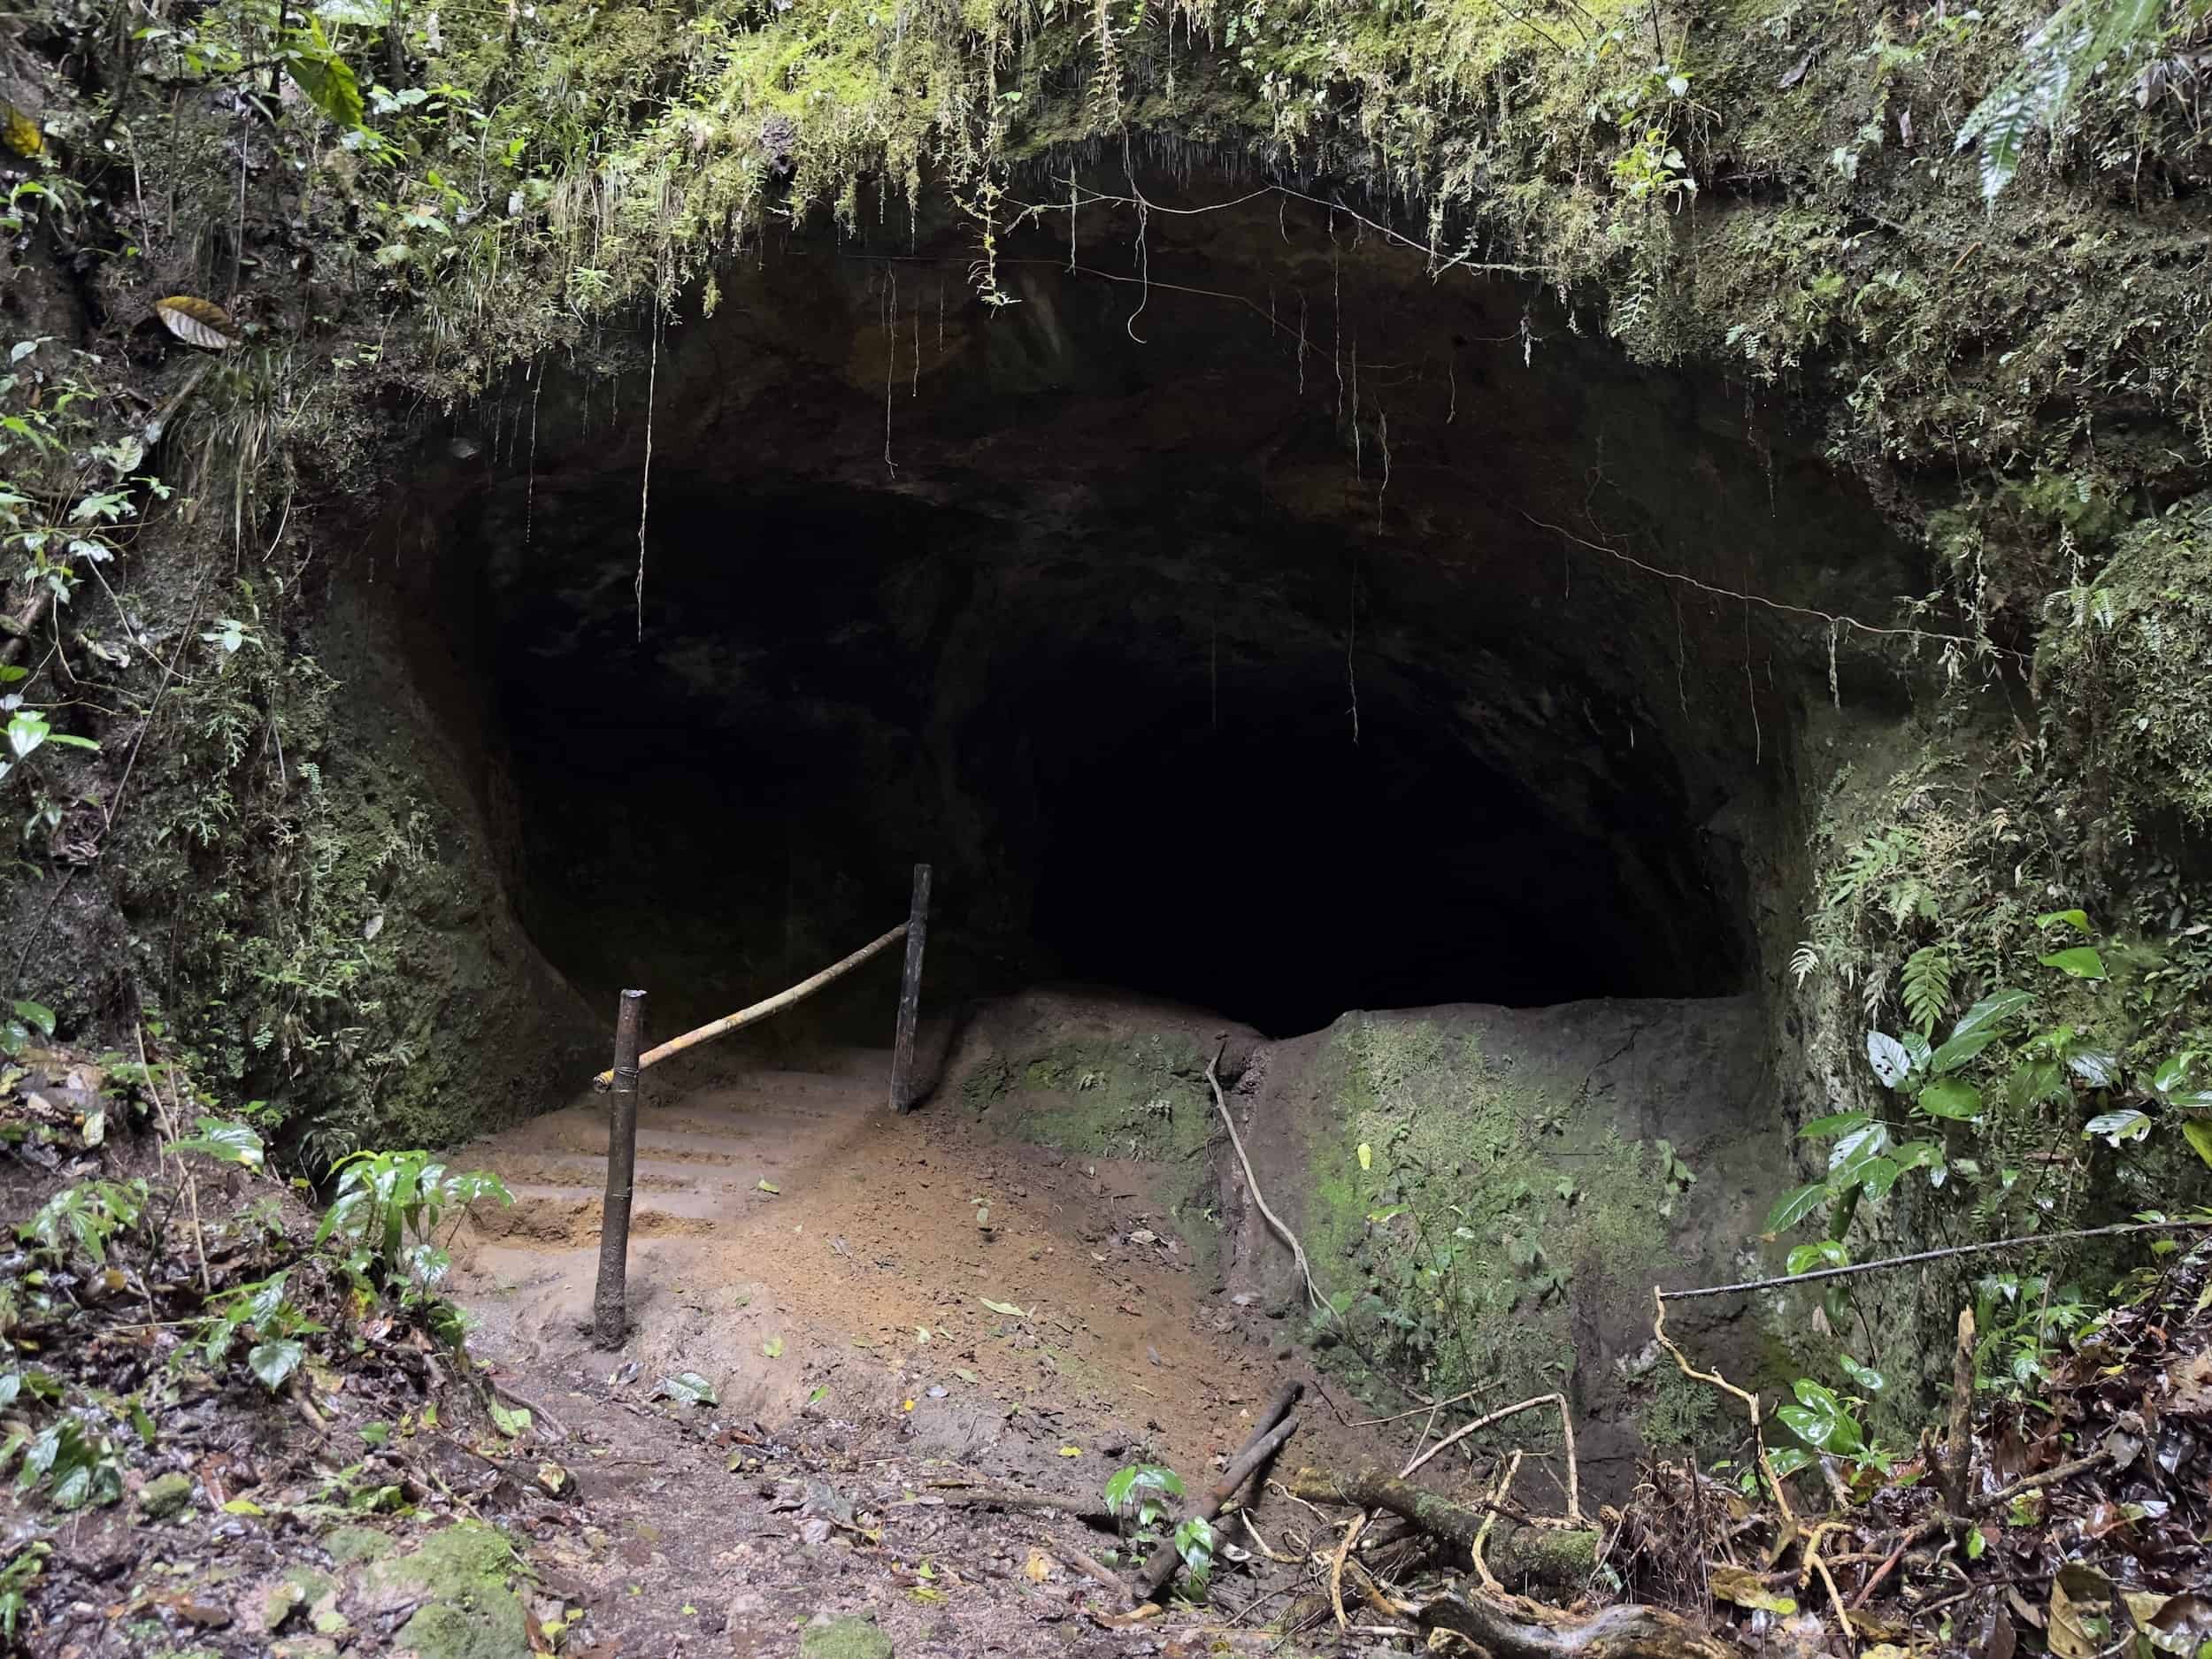 Other end of the cave at Santa Rita Nature Reserve in Boquía, Salento, Quindío, Colombia